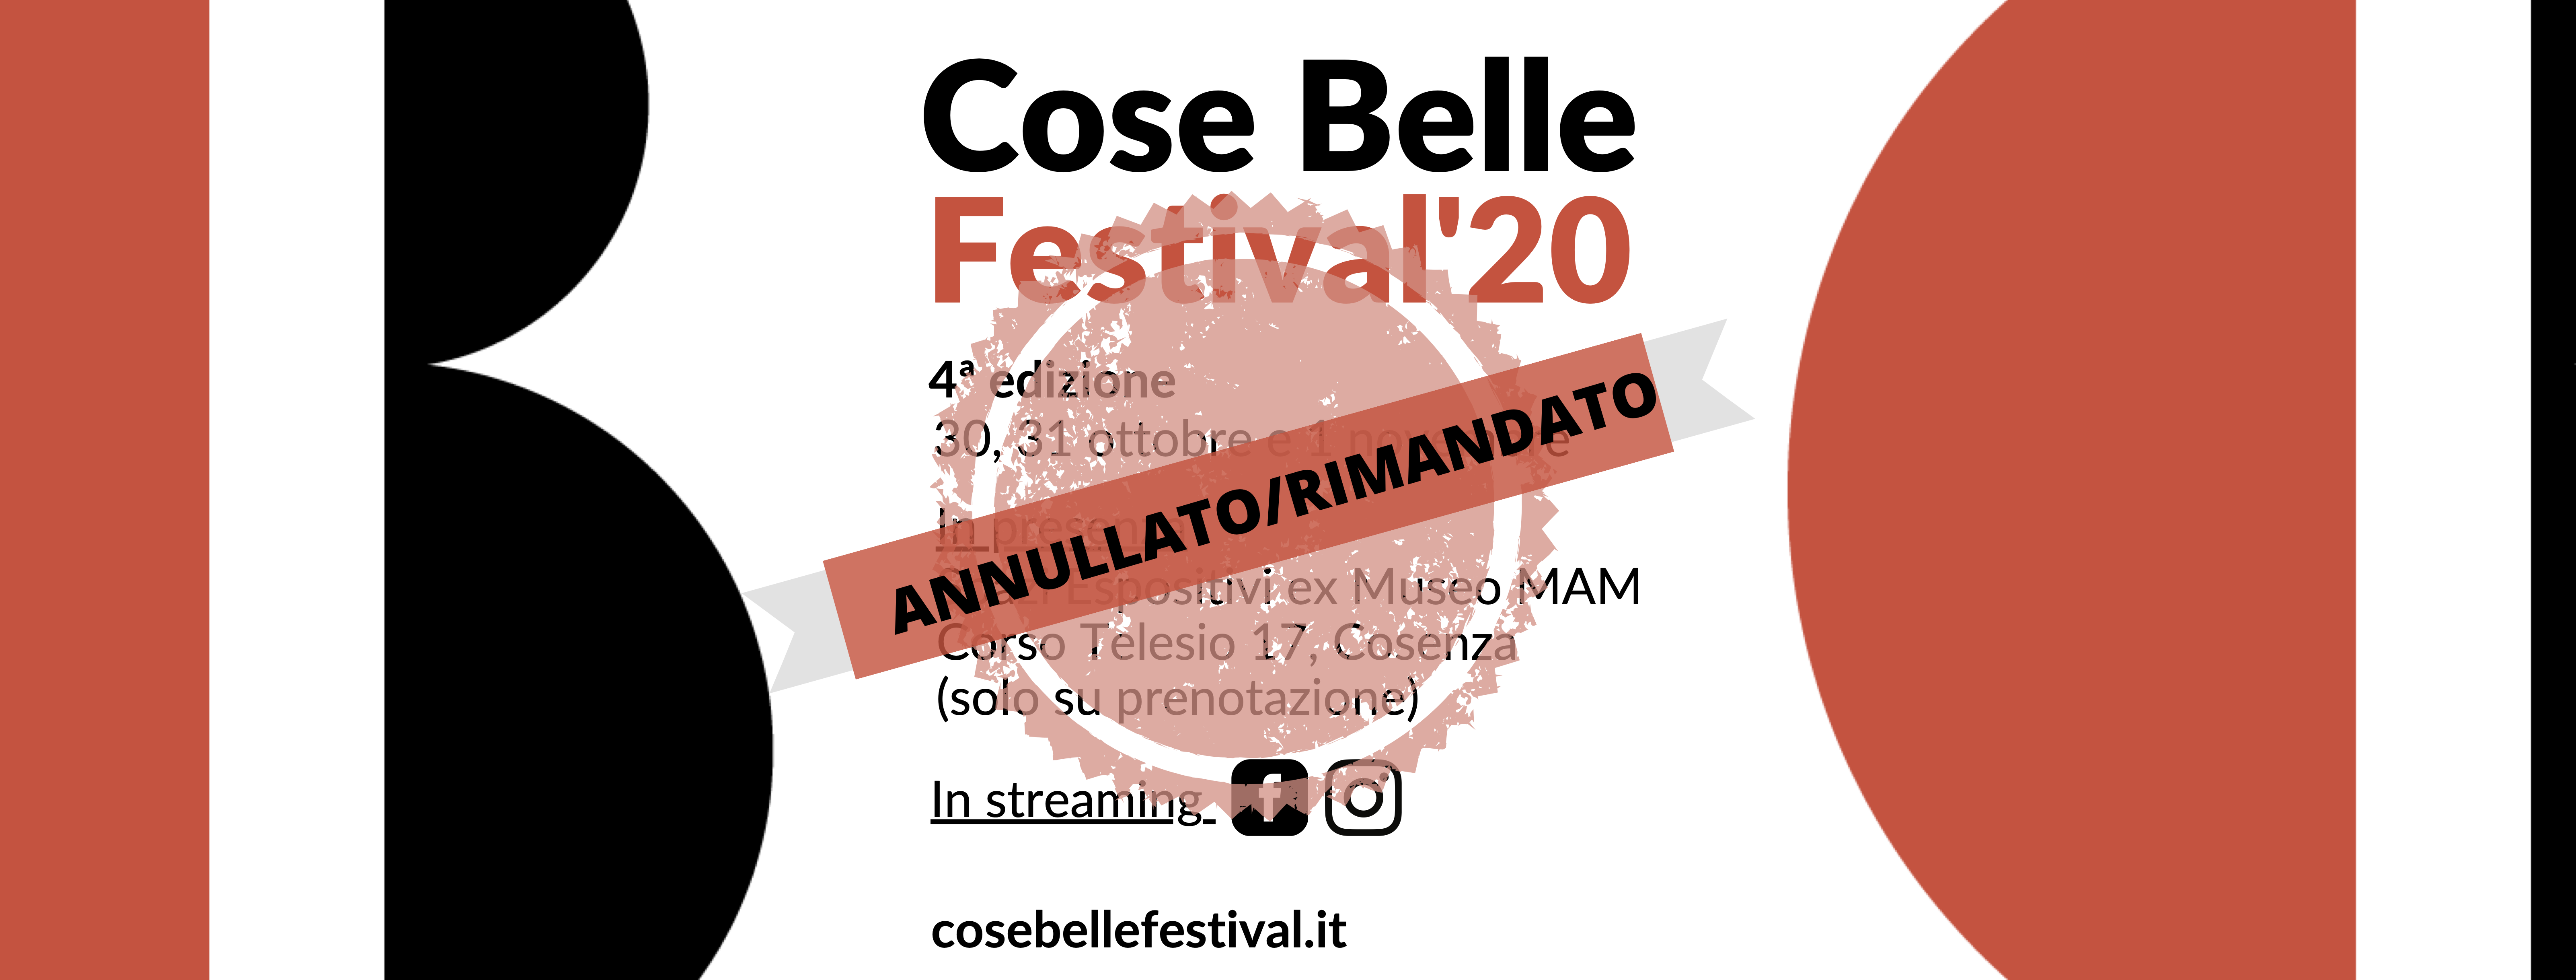 Cose Belle Festival 2020 postcard